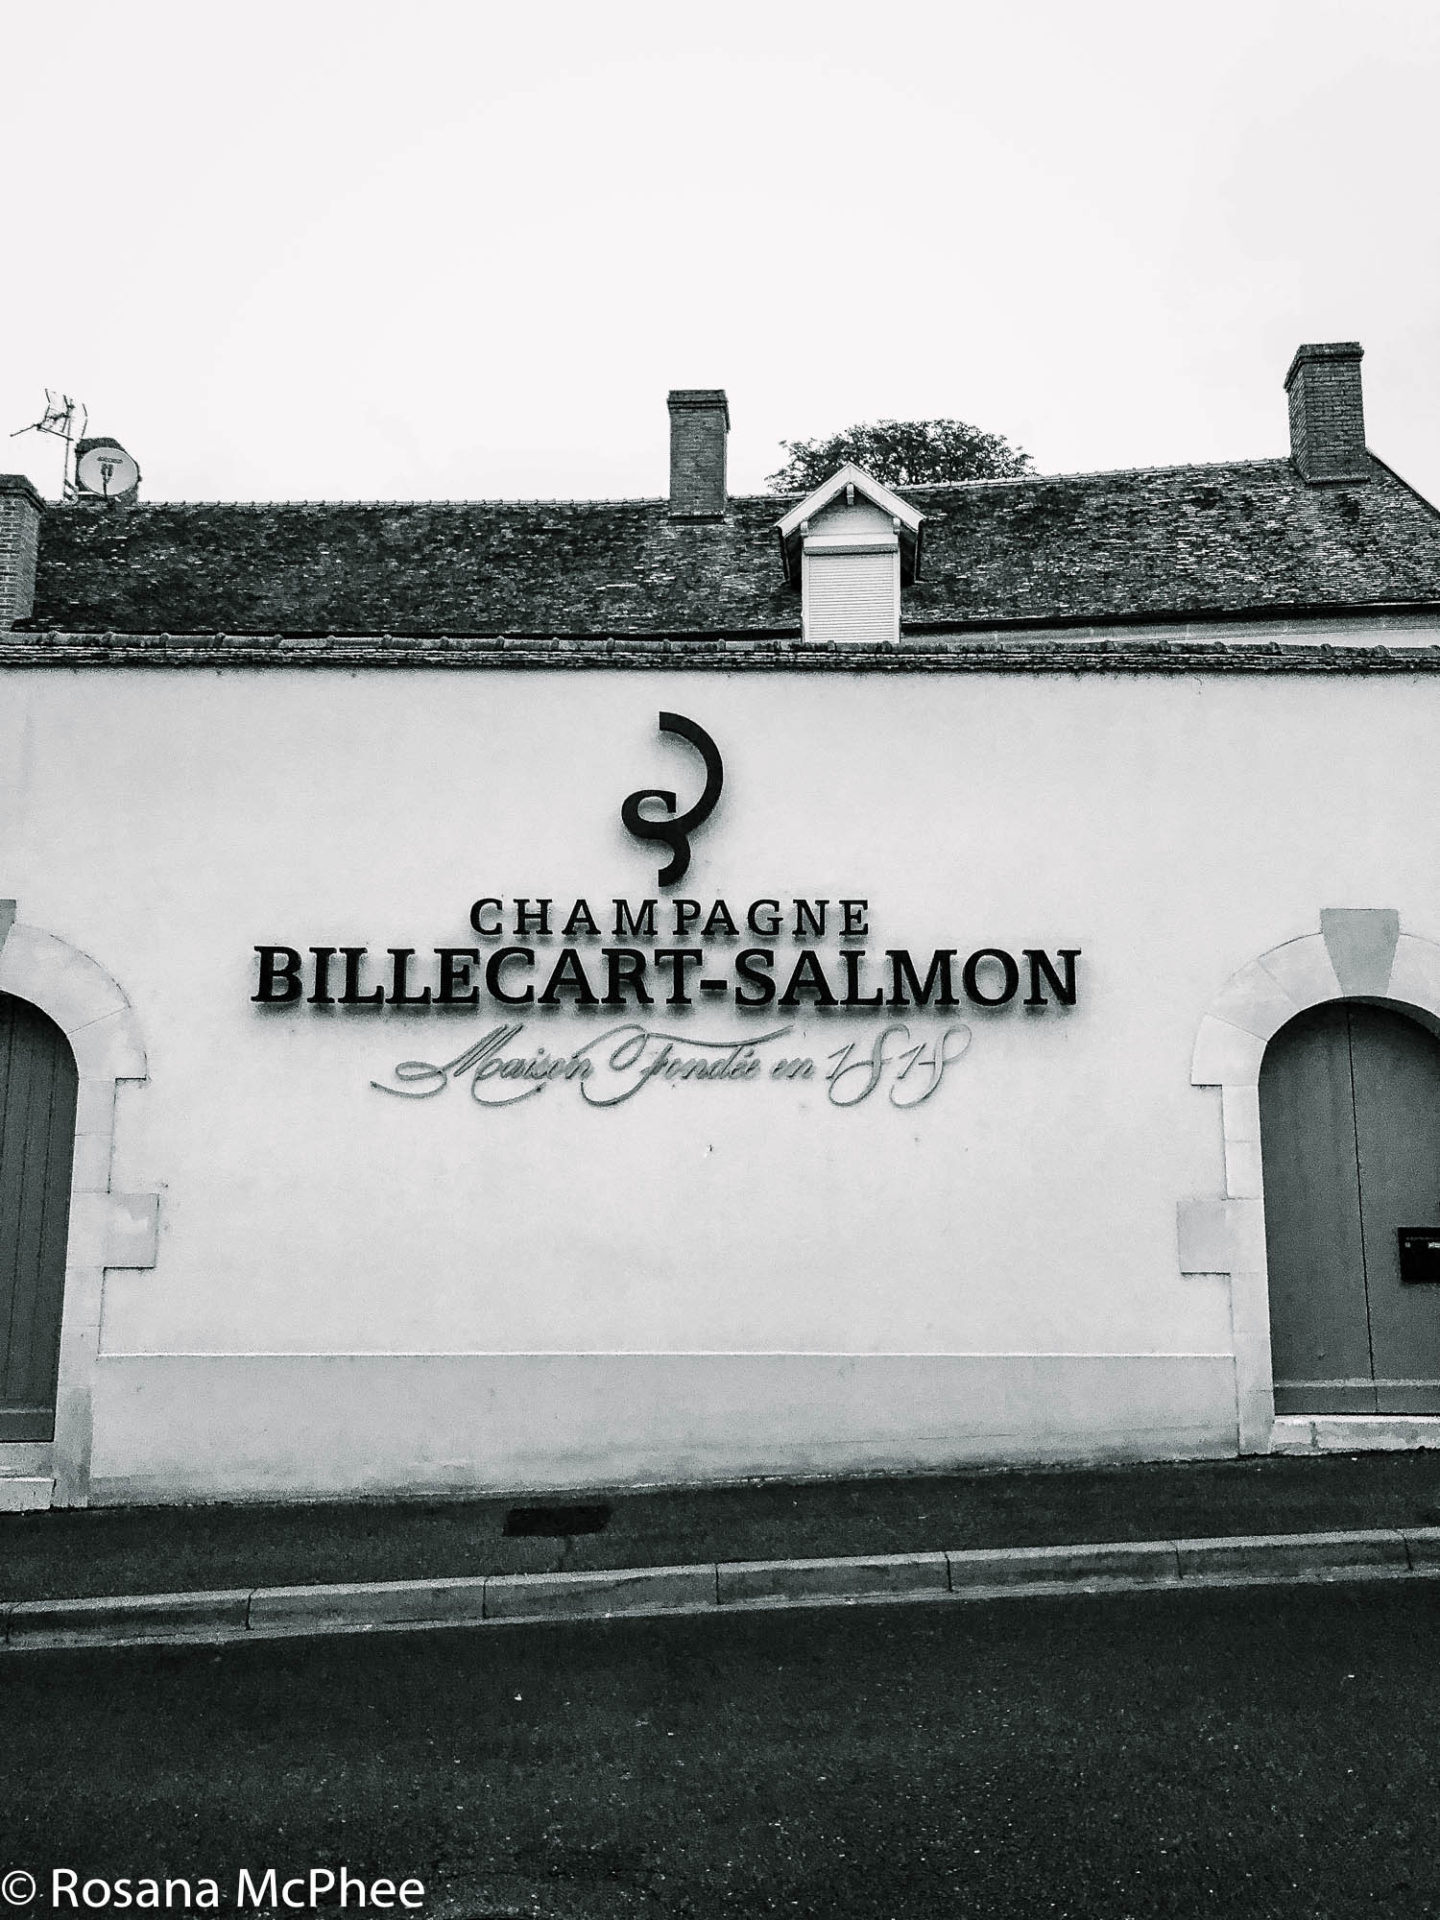 House of Billecart-Salmon Champagne